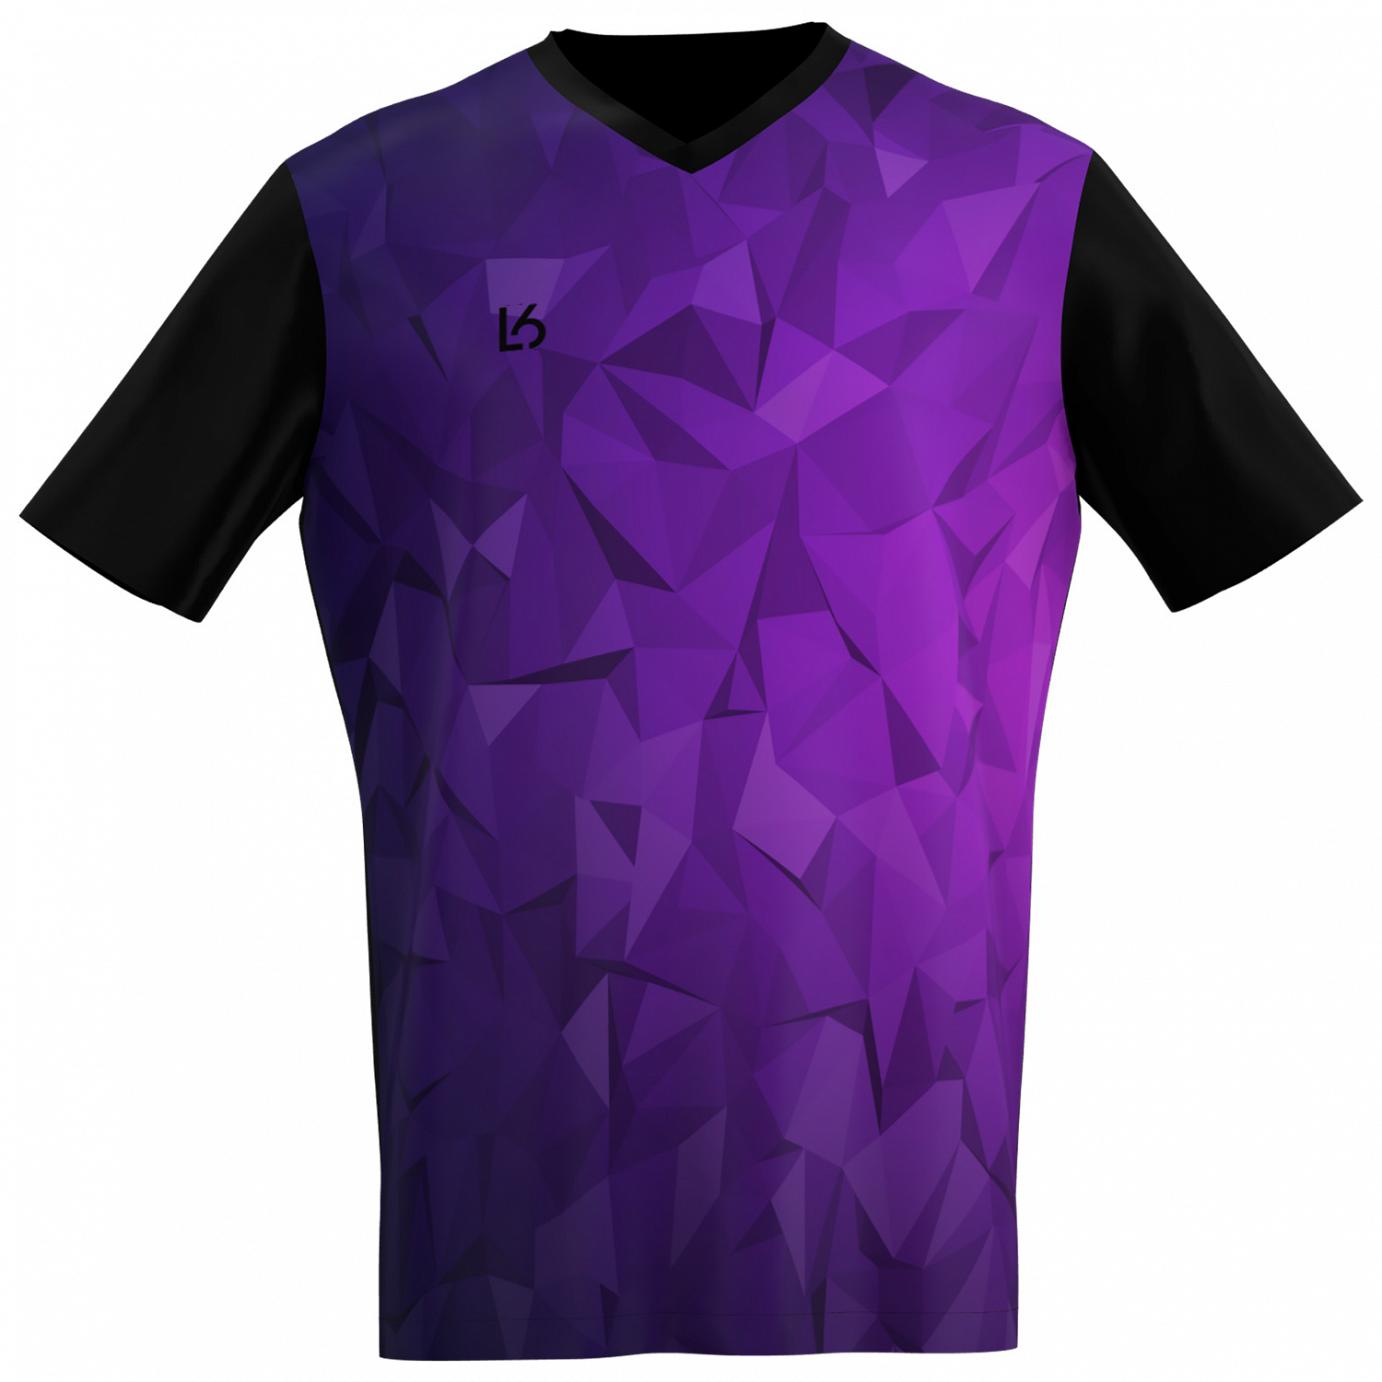 L6 V-Neck Trikot - Polygon Purple